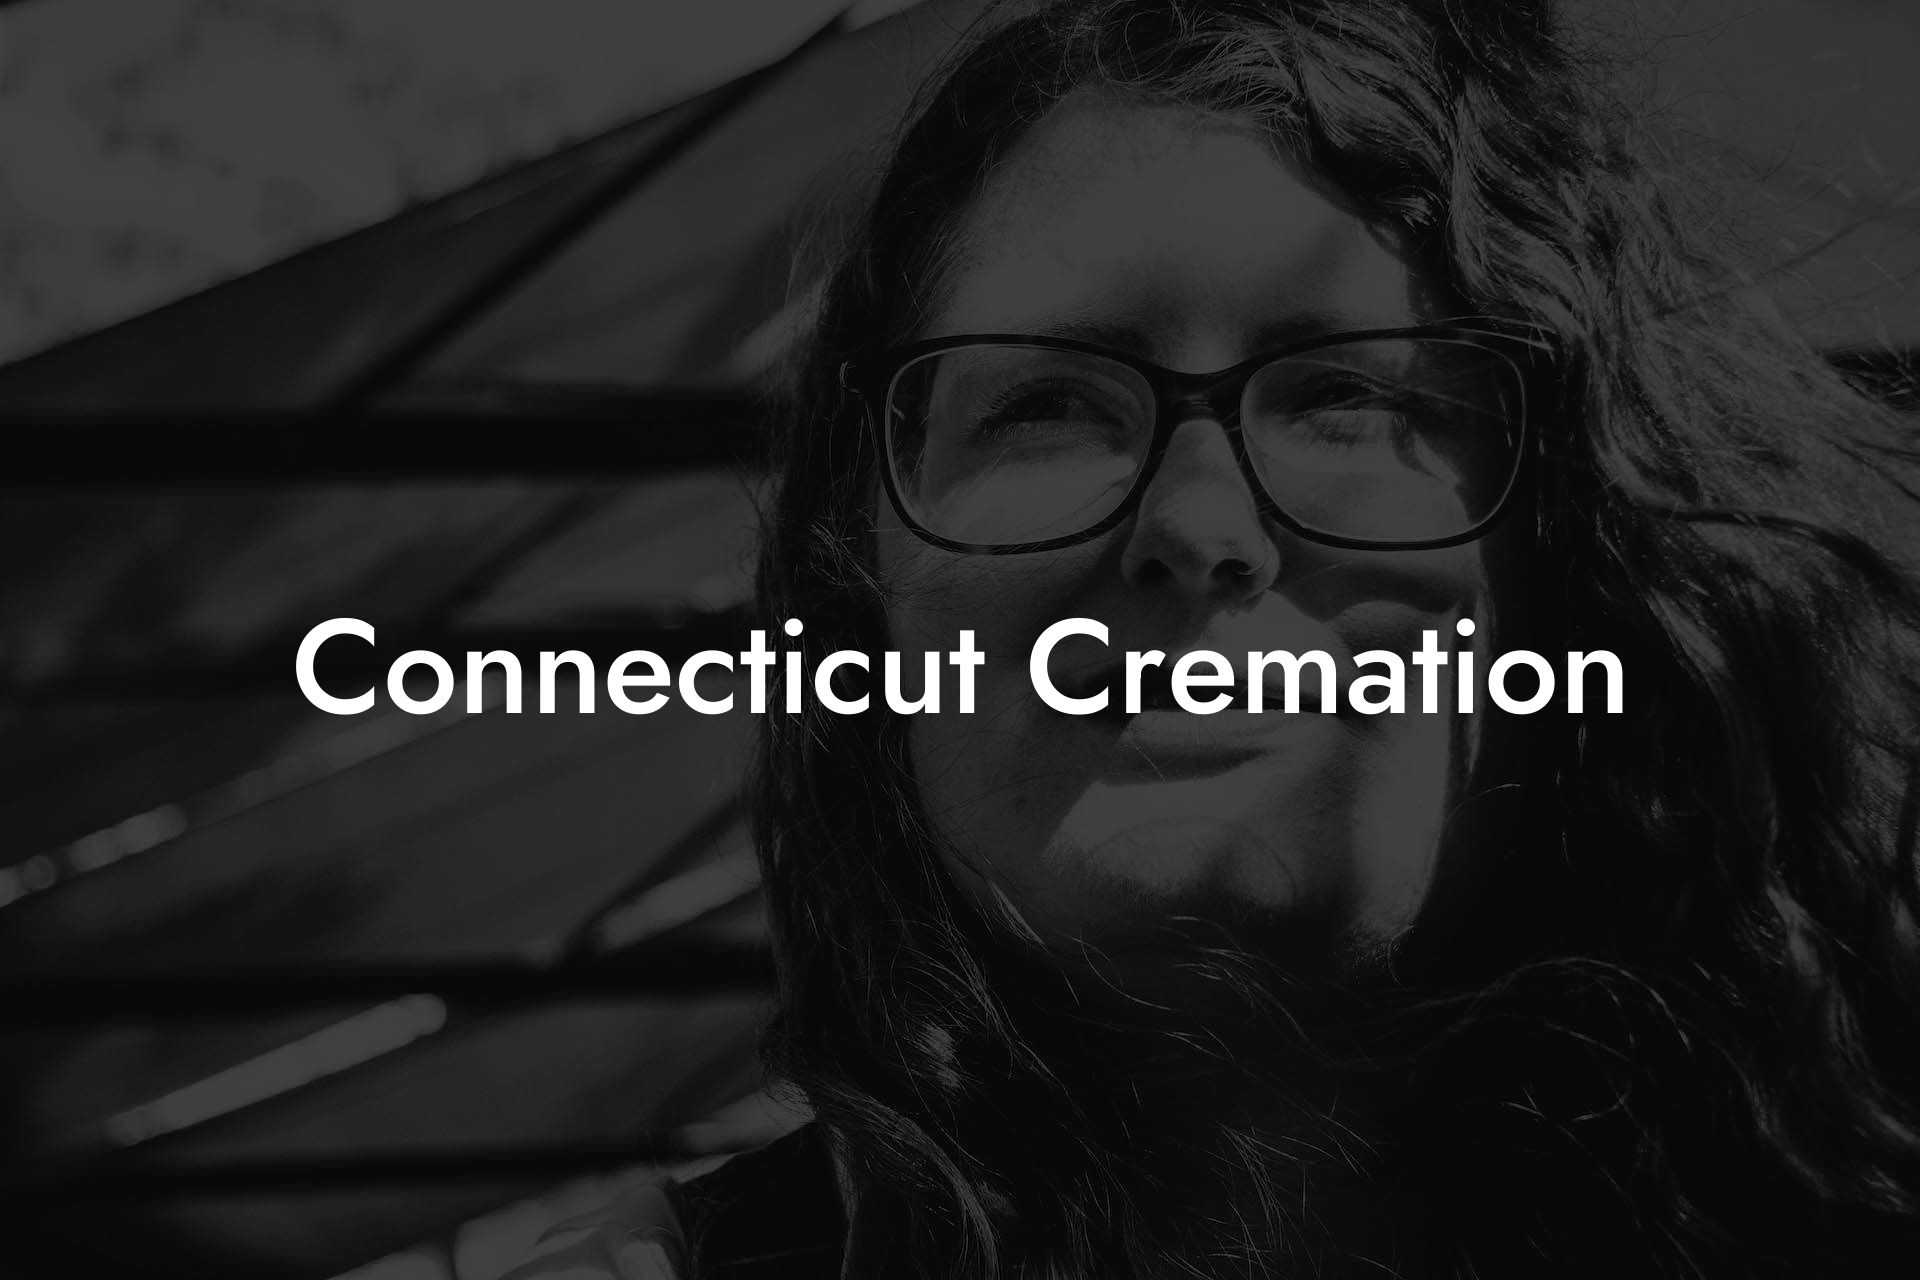 Connecticut Cremation